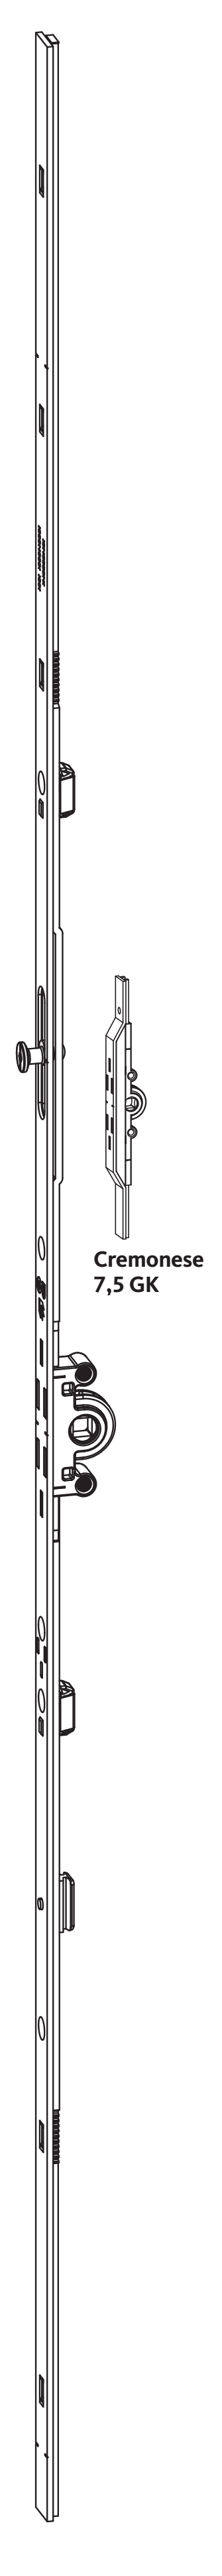 GU-ITALIA -  Cremonese UNI-JET anta a bandiera altezza maniglia fissa prolungabile senza dss - gr / dim. 1940 - entrata 7,5 - alt. man. 980 - lbb/hbb 1851 - 2100